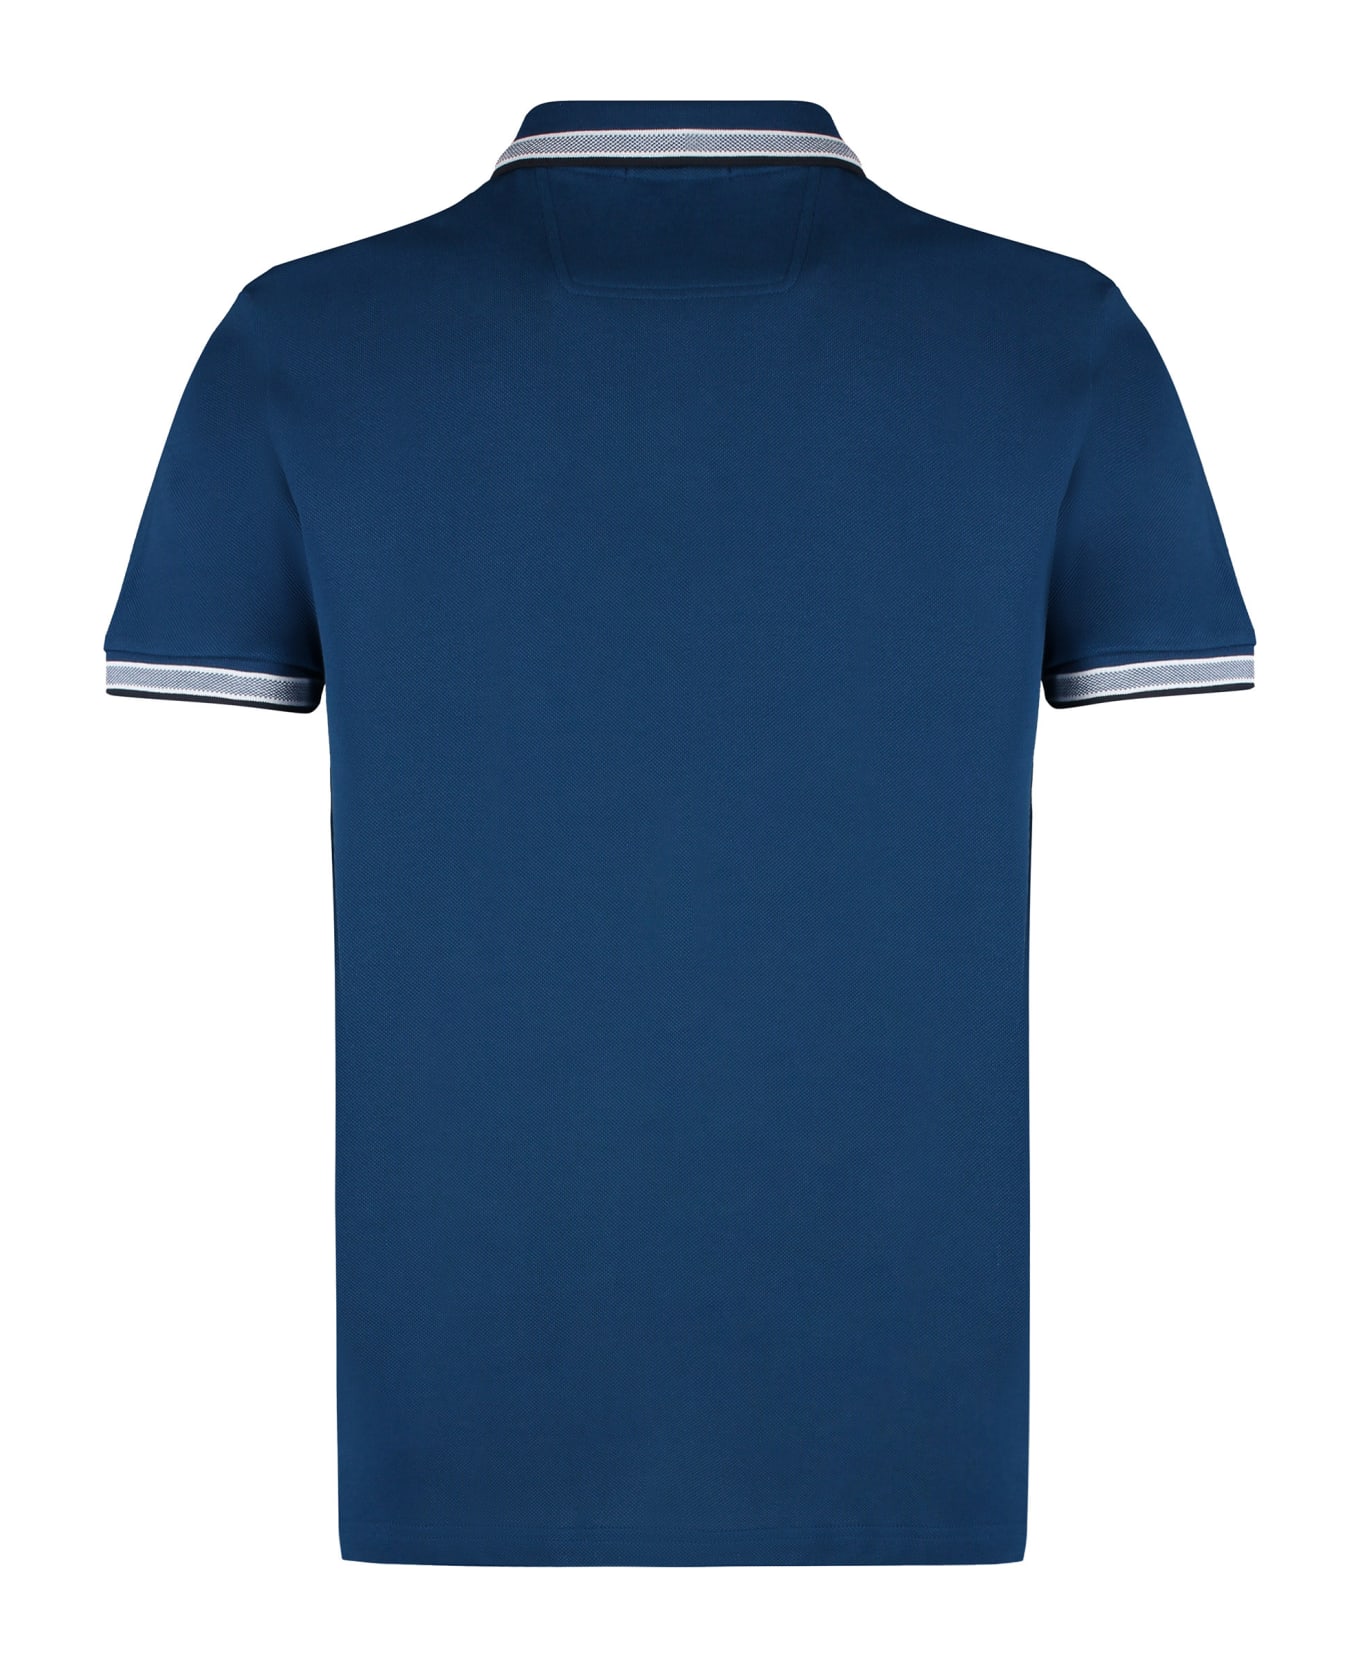 Hugo Boss Short Sleeve Cotton Pique Polo Shirt - Blue ポロシャツ